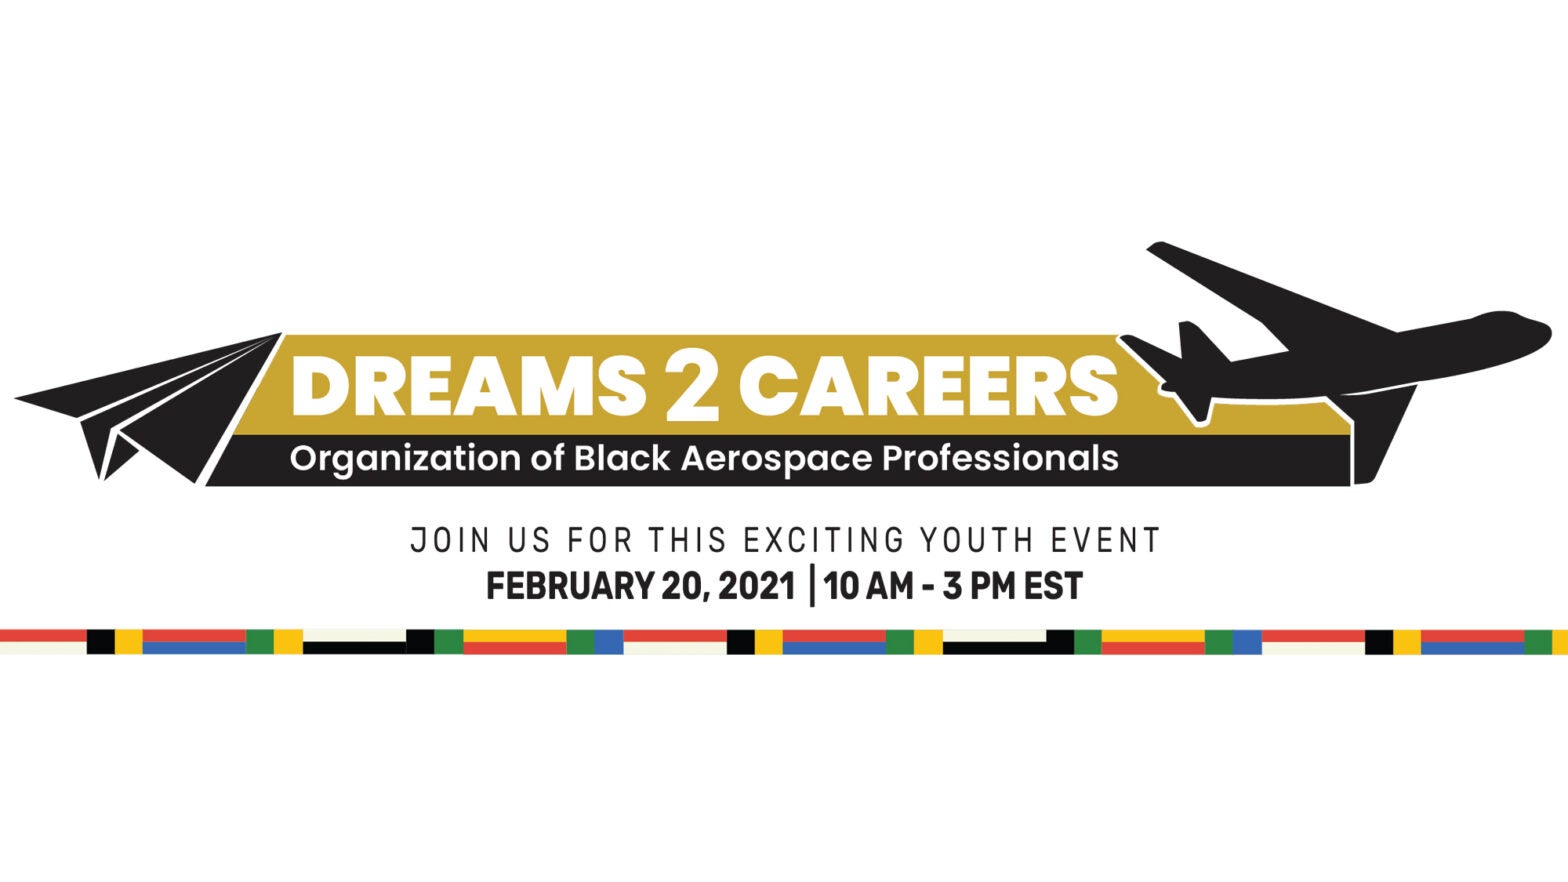 Dreams2Careers Program Live on February 20